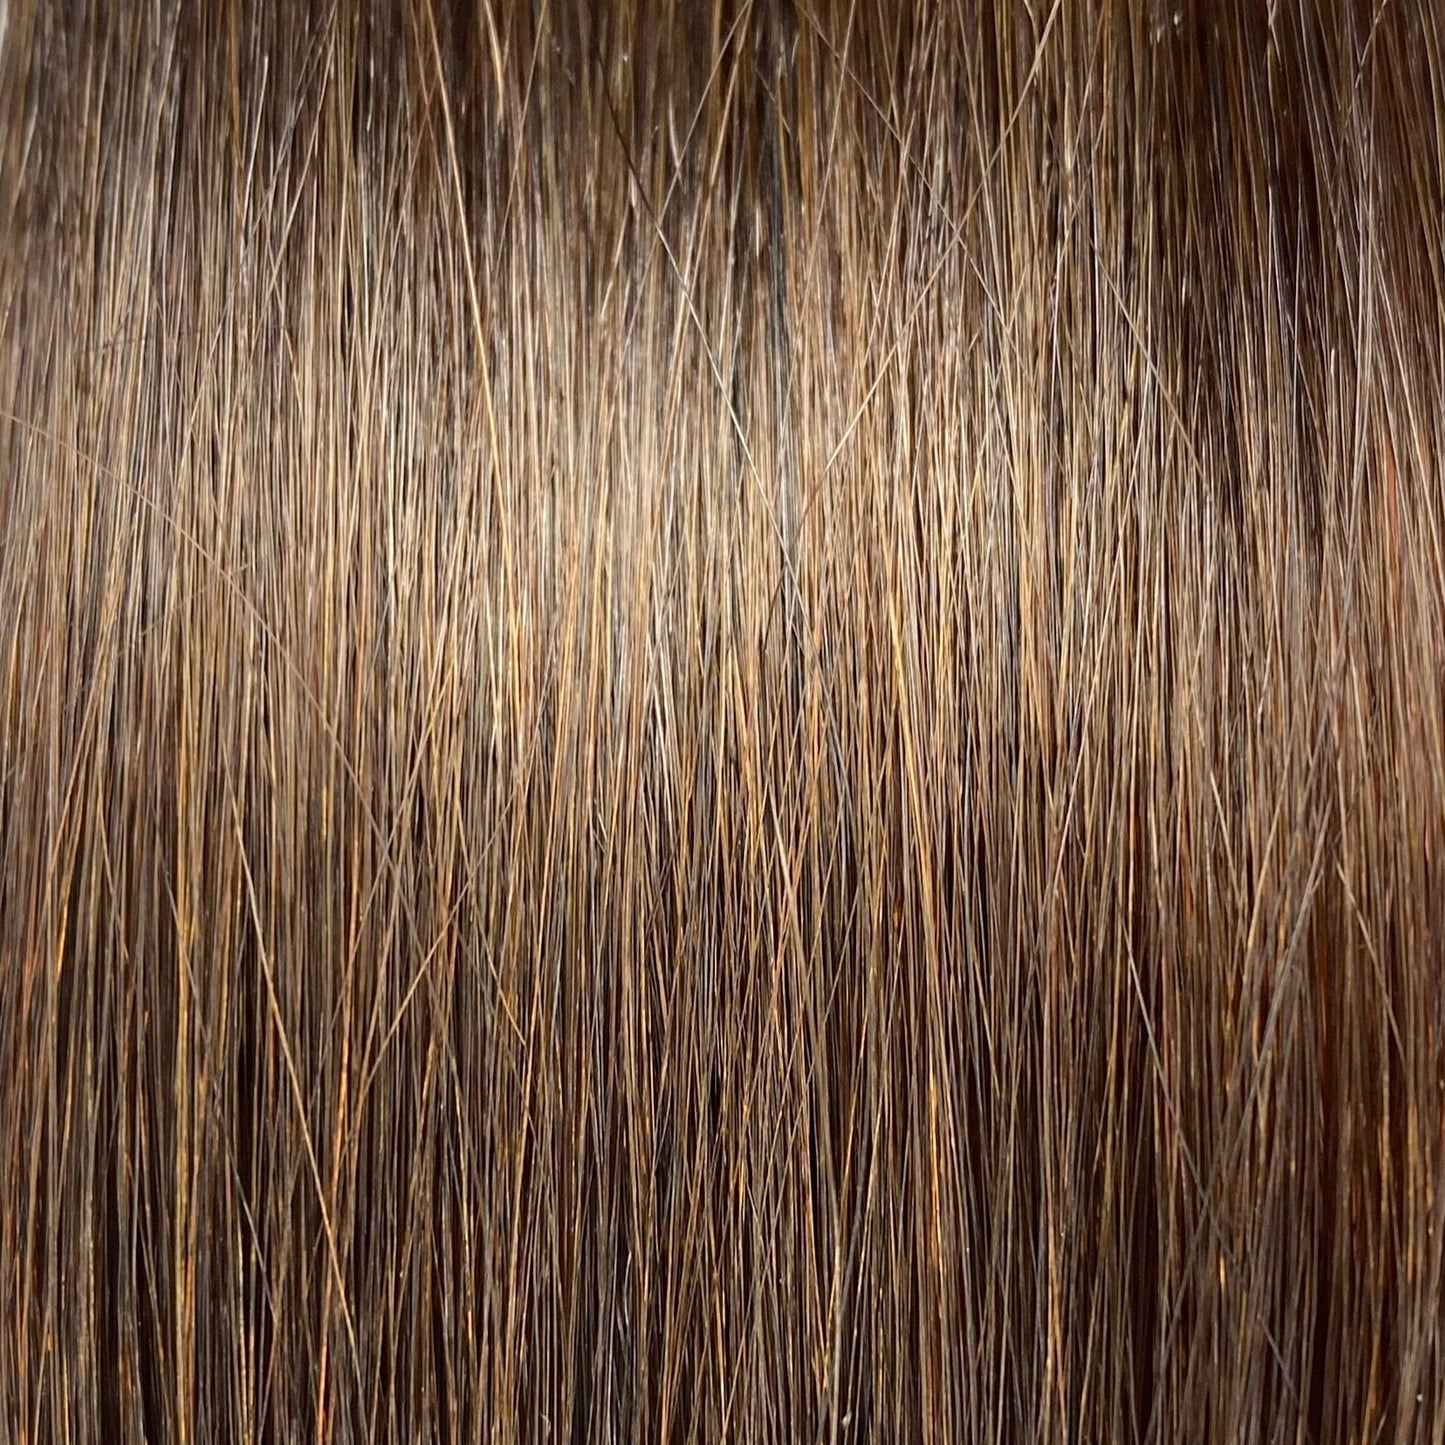 Fusion hair extensions #6 - 50cm/20 inches - Light Chestnut Fusion Euro So Cap 